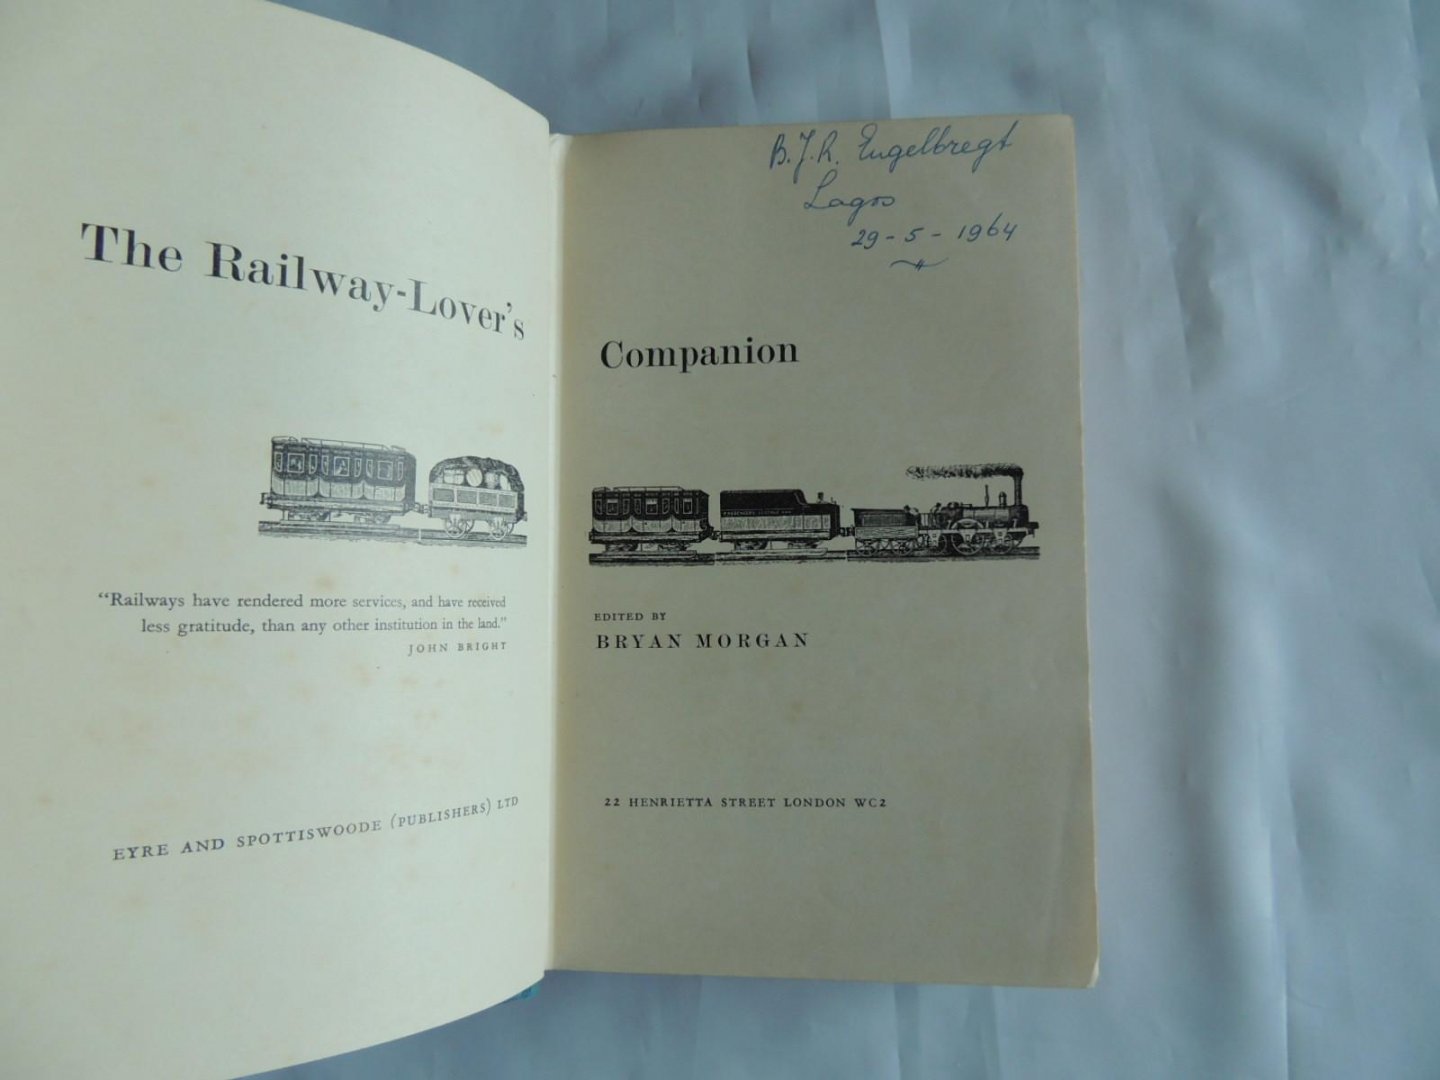 Bryan Morgan - The railway-lover's companion